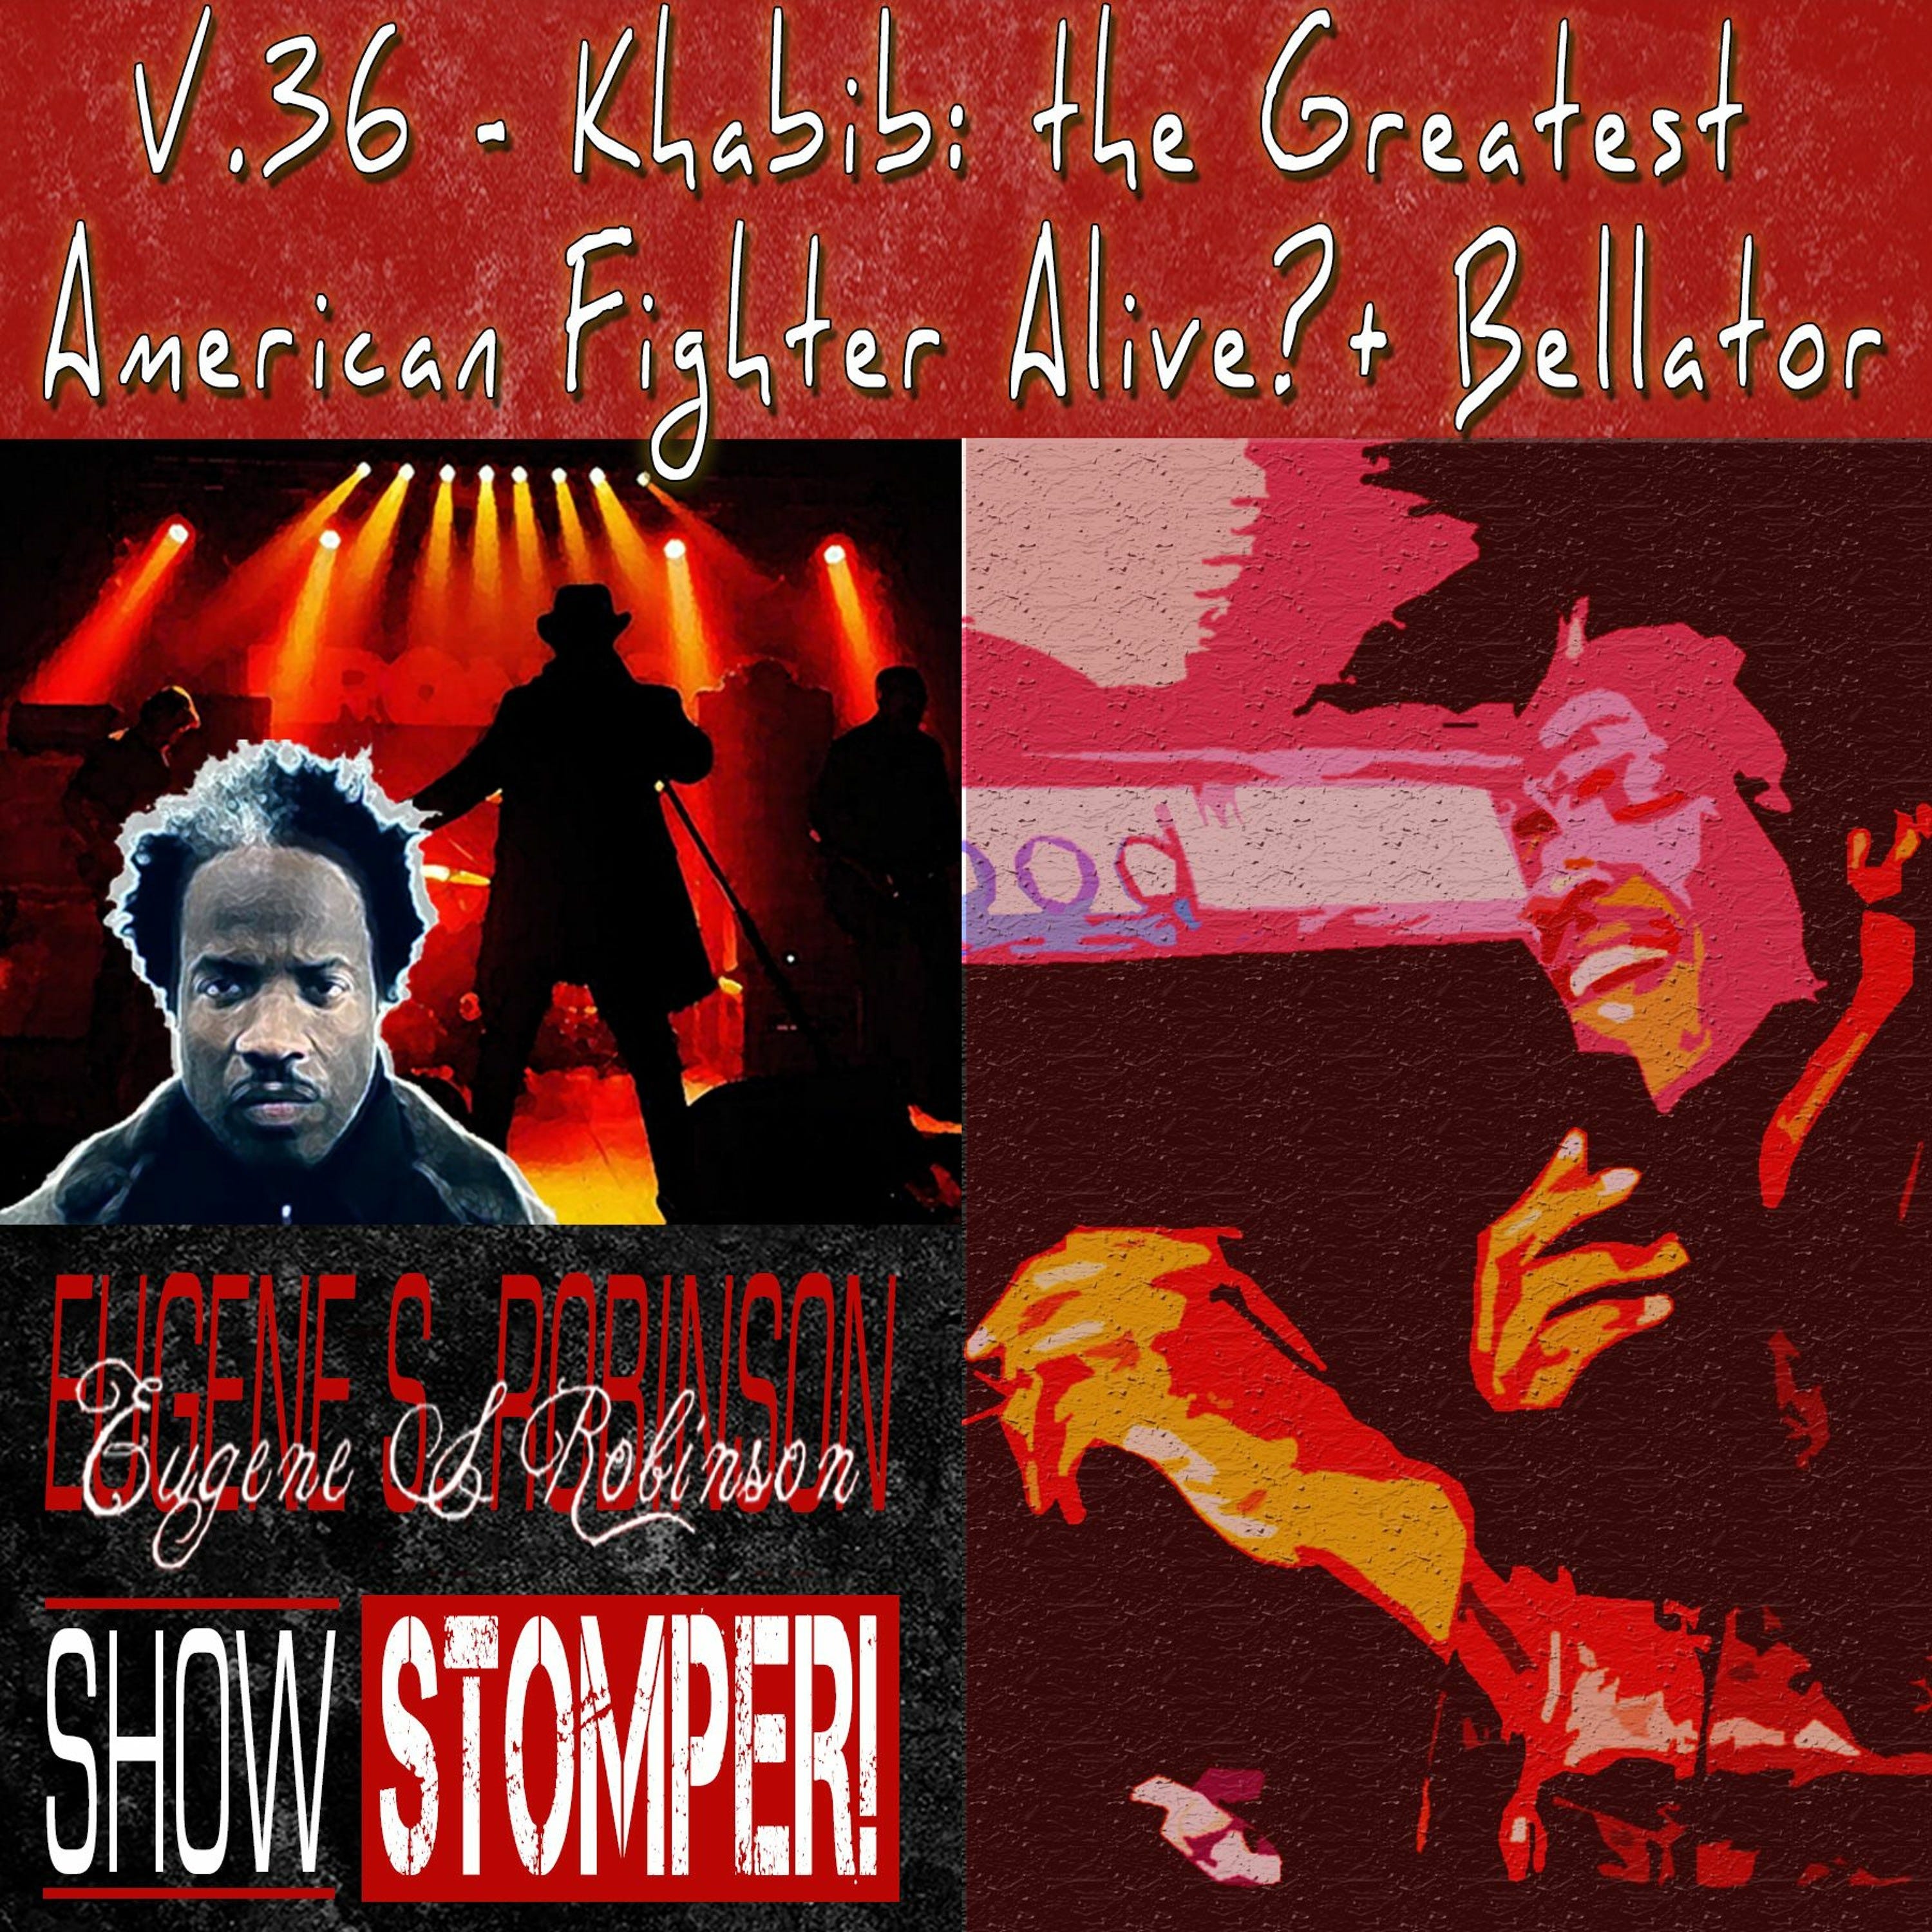 The Eugene S. Robinson Show Stomper! V.36 - Khabib: The Greatest American Fighter Alive! + Bellator